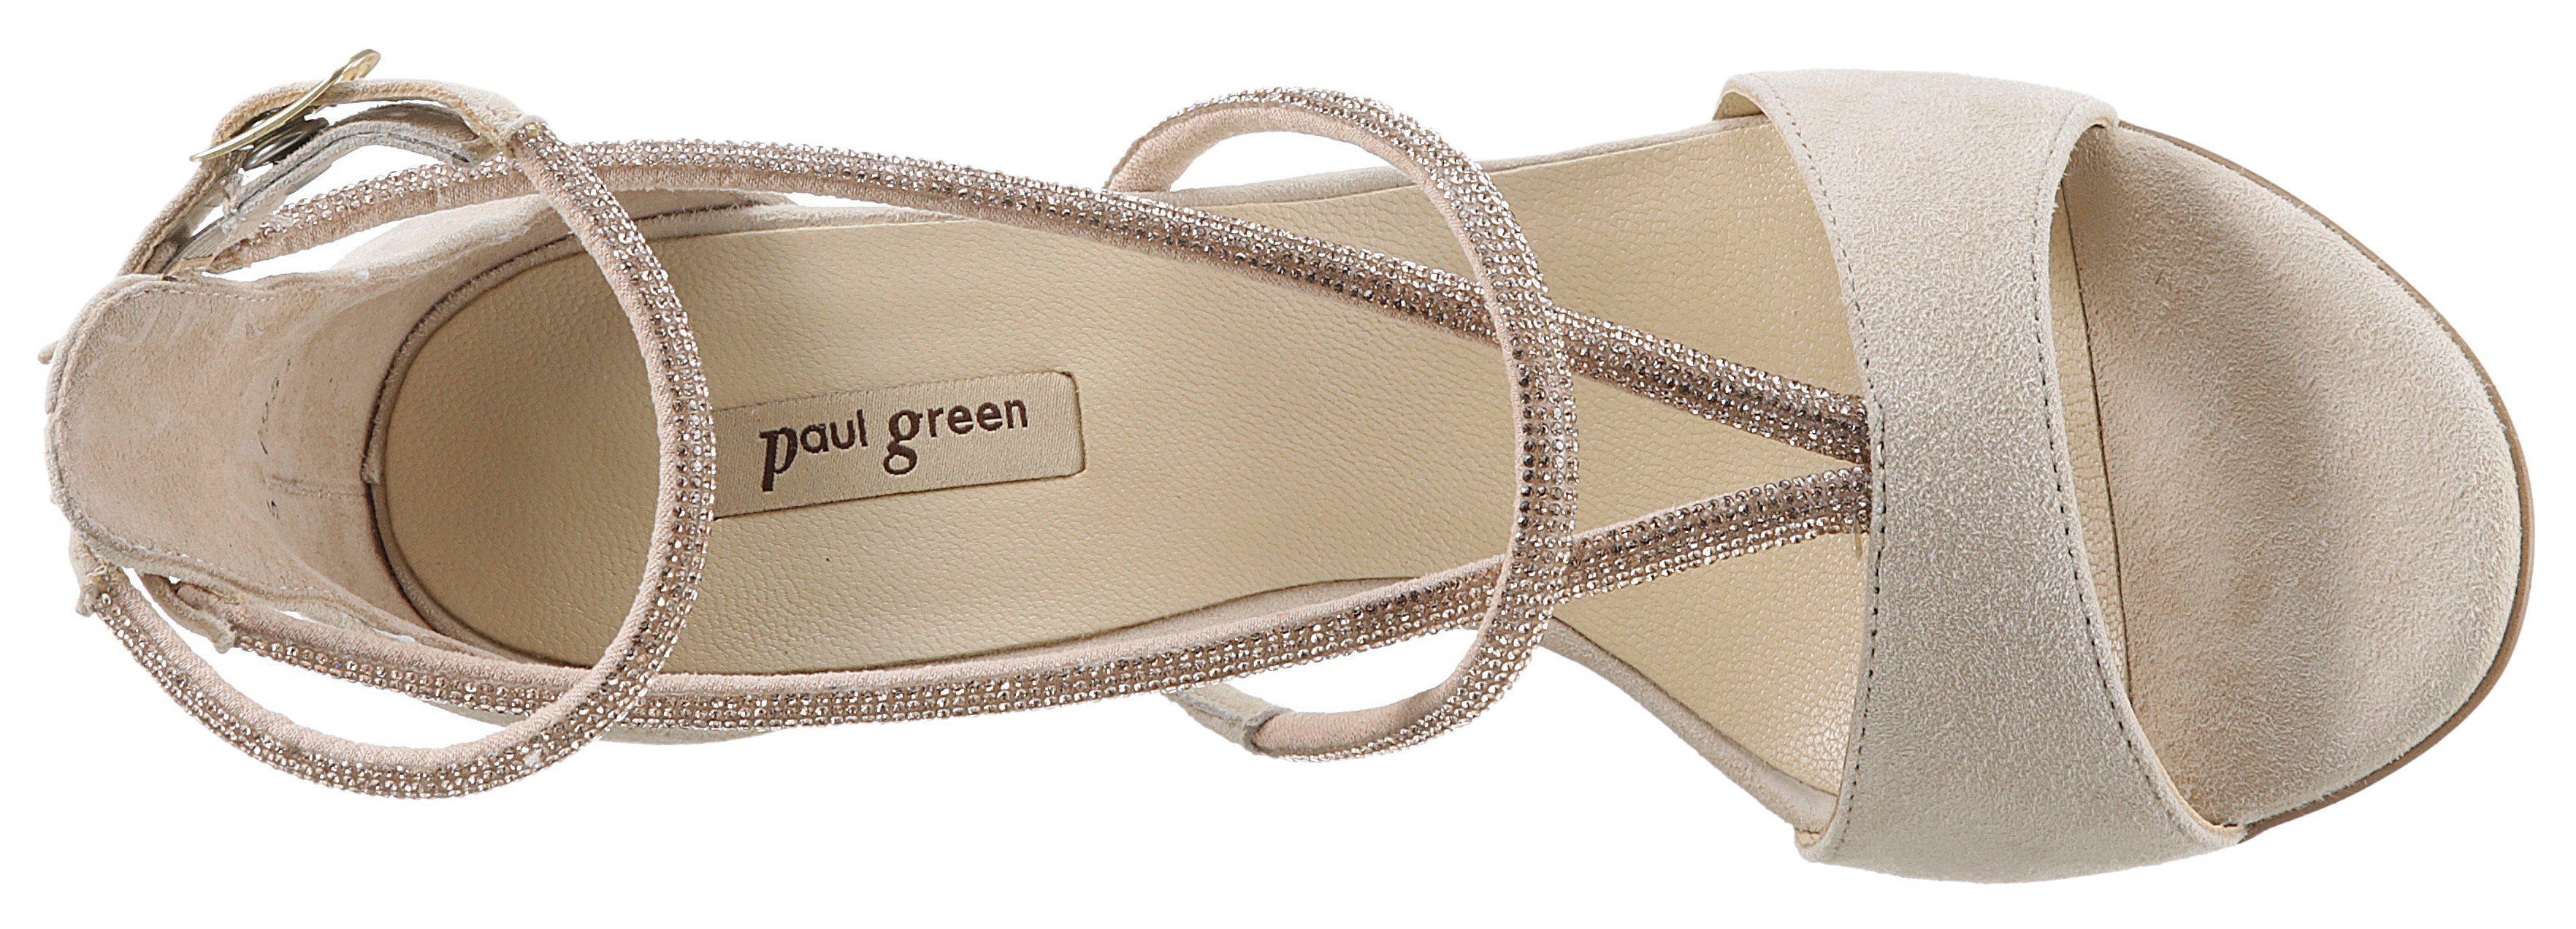 in beige Sandalette Paul Optik Green eleganter